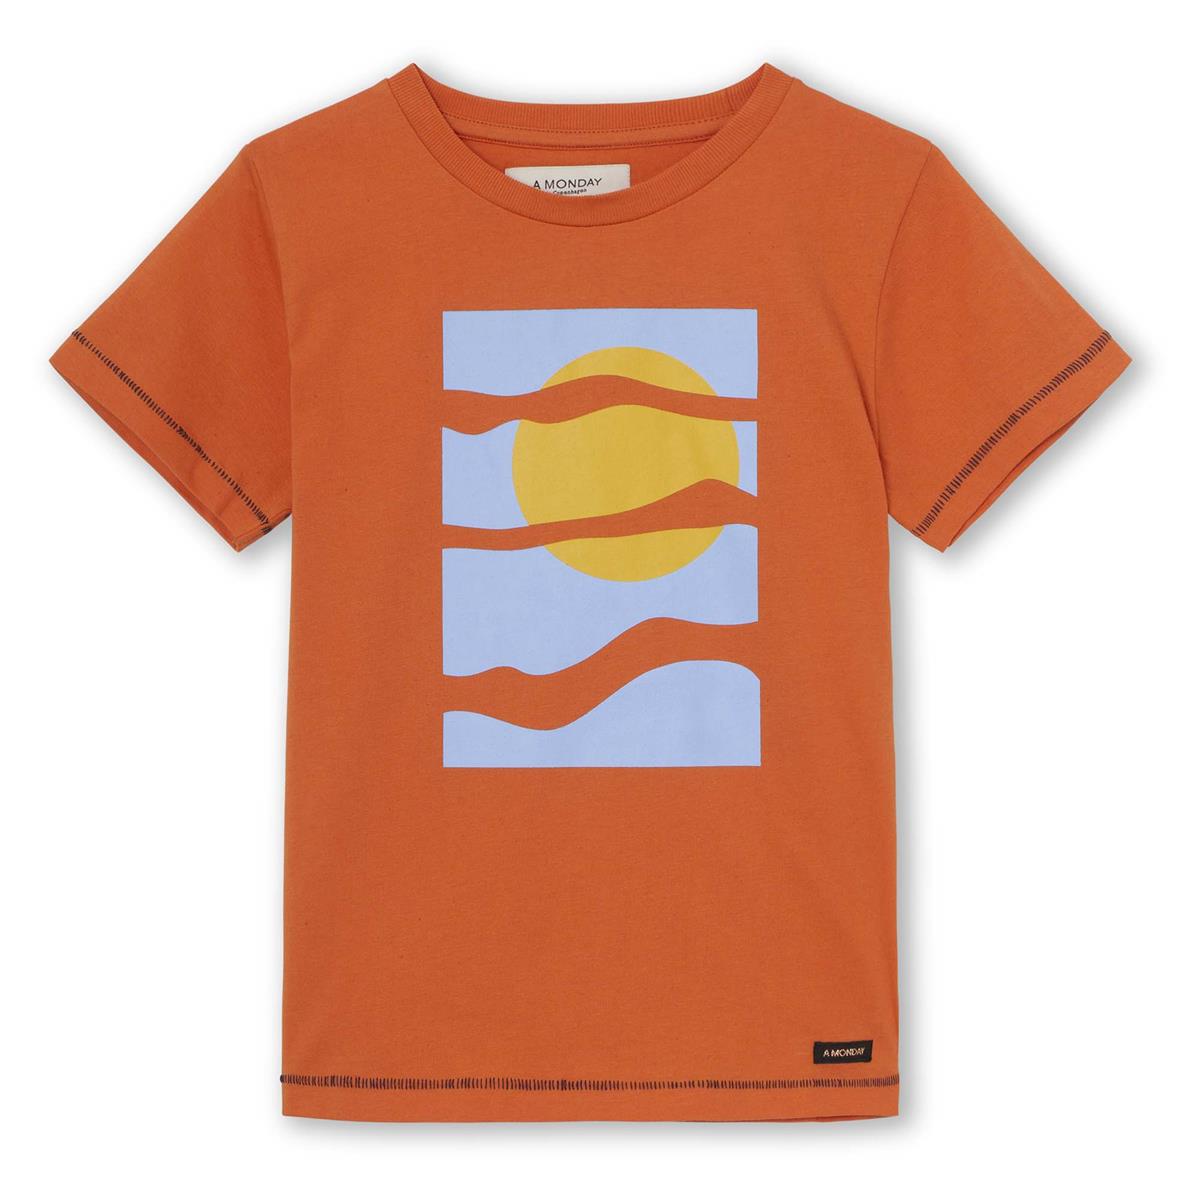 A MONDAY IN COPENHAGEN - Sky t-shirt - Apricot Orange